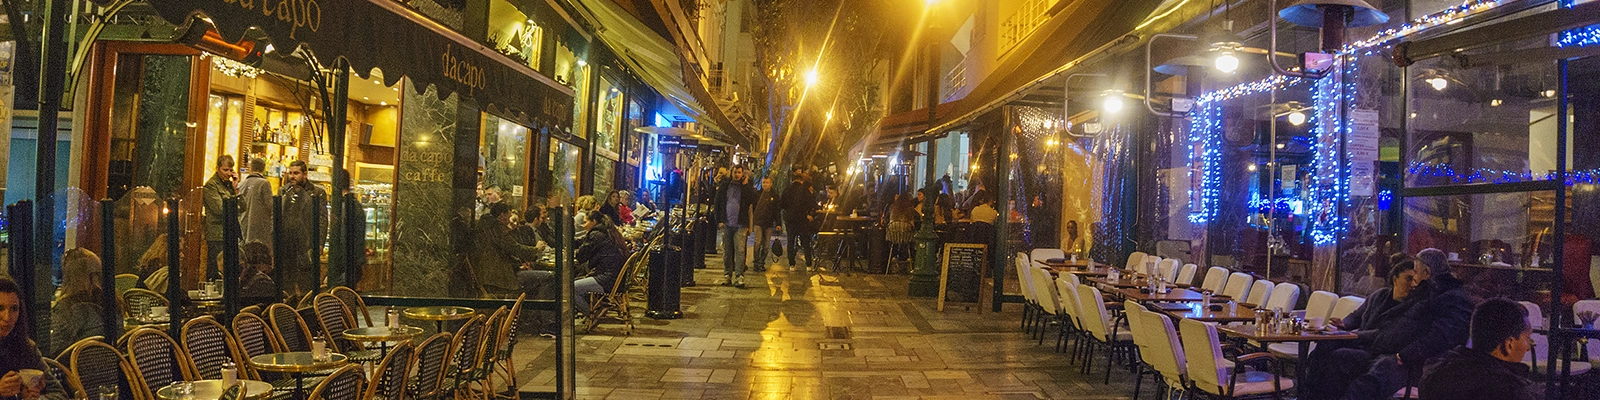 Nightime in Kolonaki. Street scene of outdoor cafes.